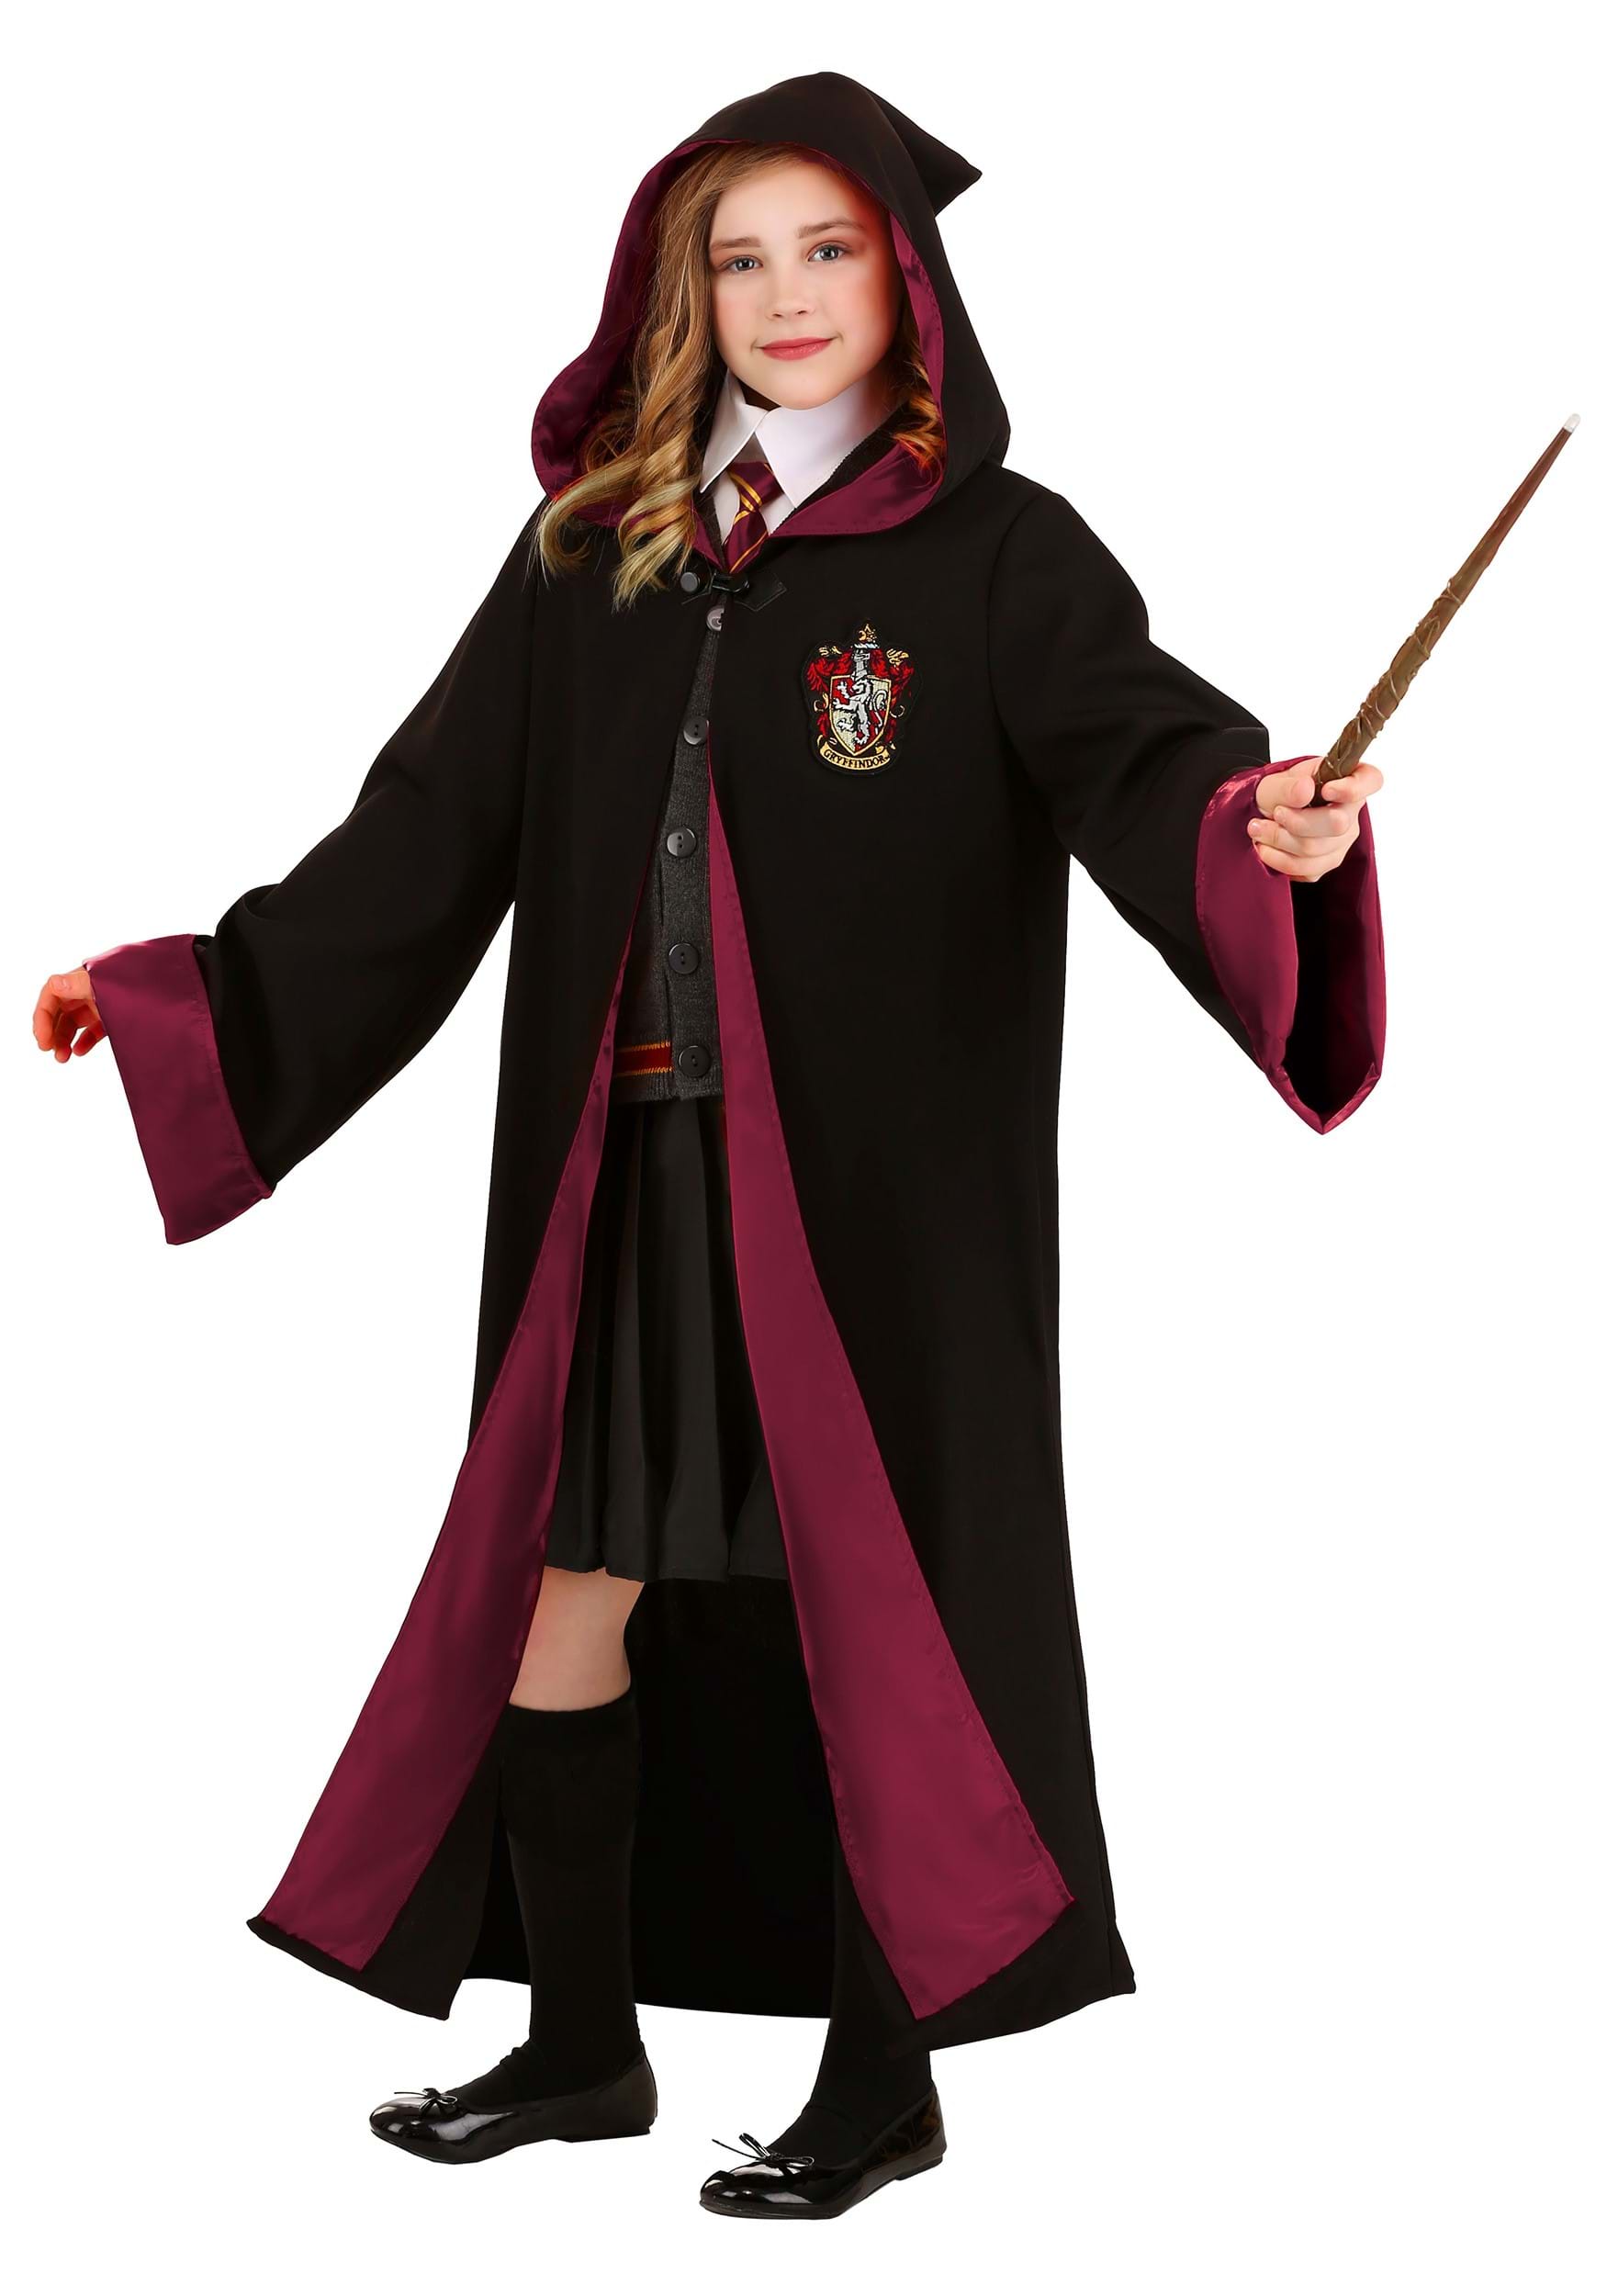 Womens Harry Potter Ravenclaw Halloween Costume Uniform Dress Large 12/14